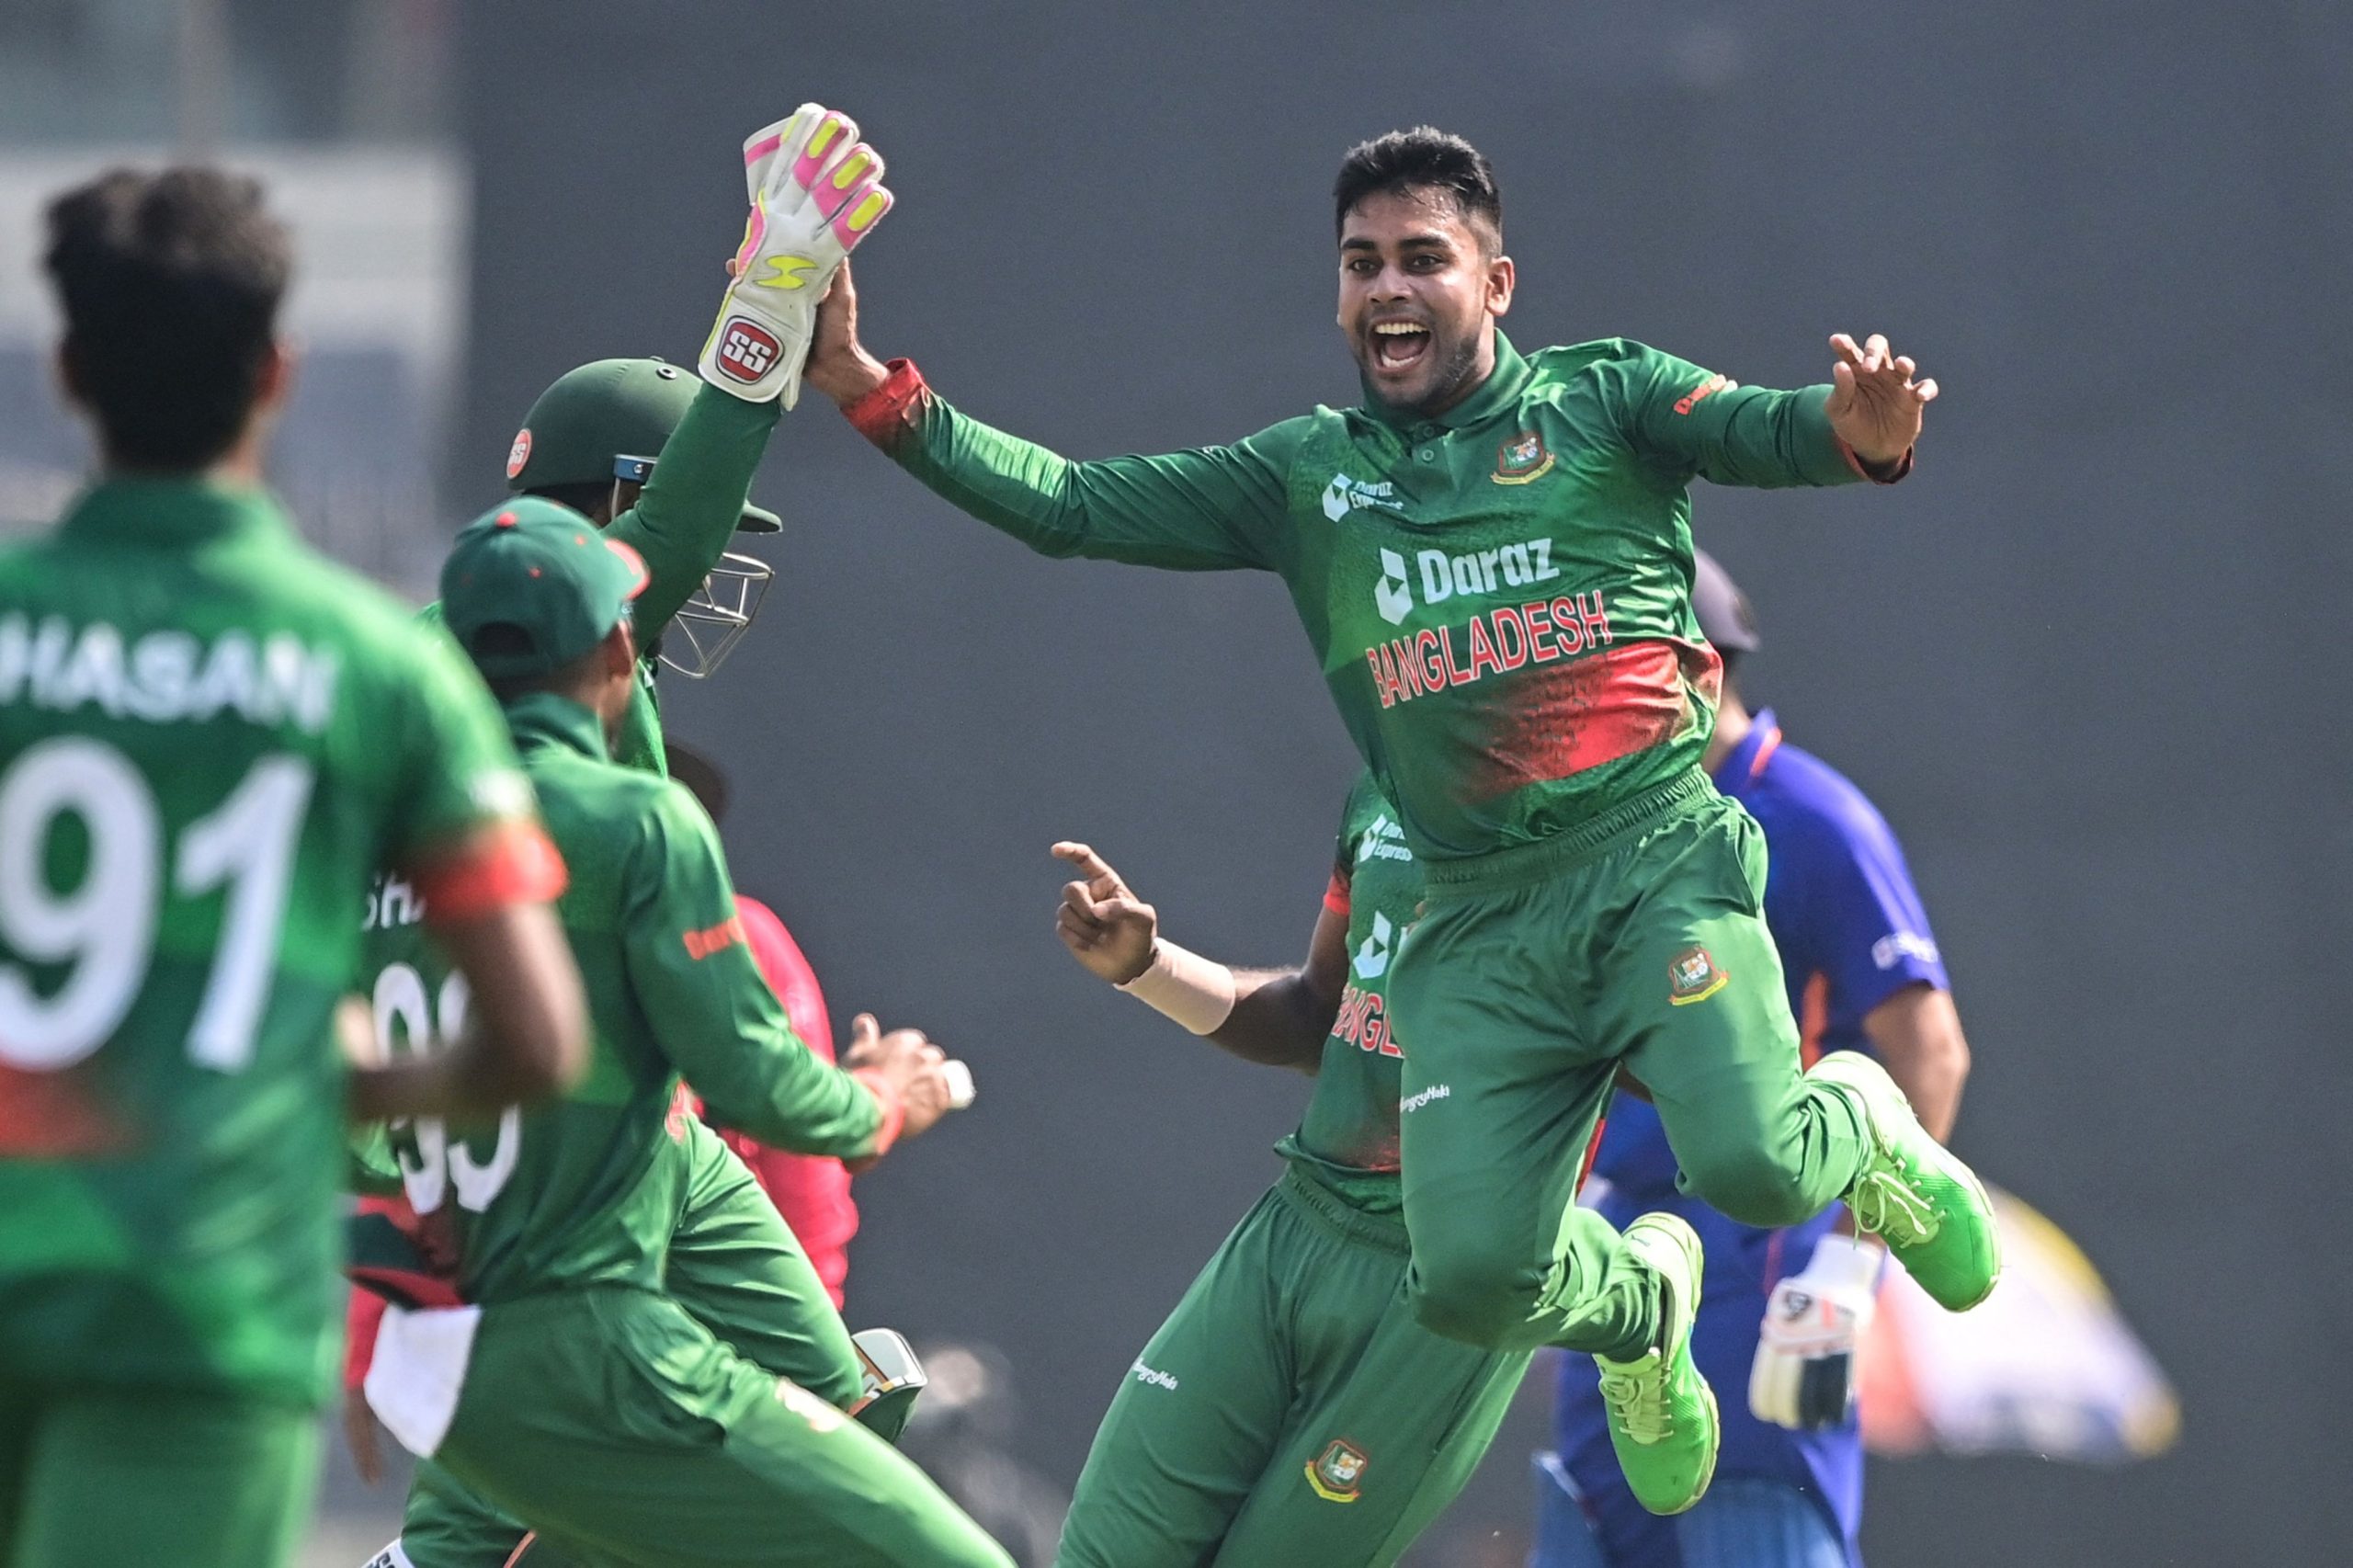 Bangladesh National Cricket Team